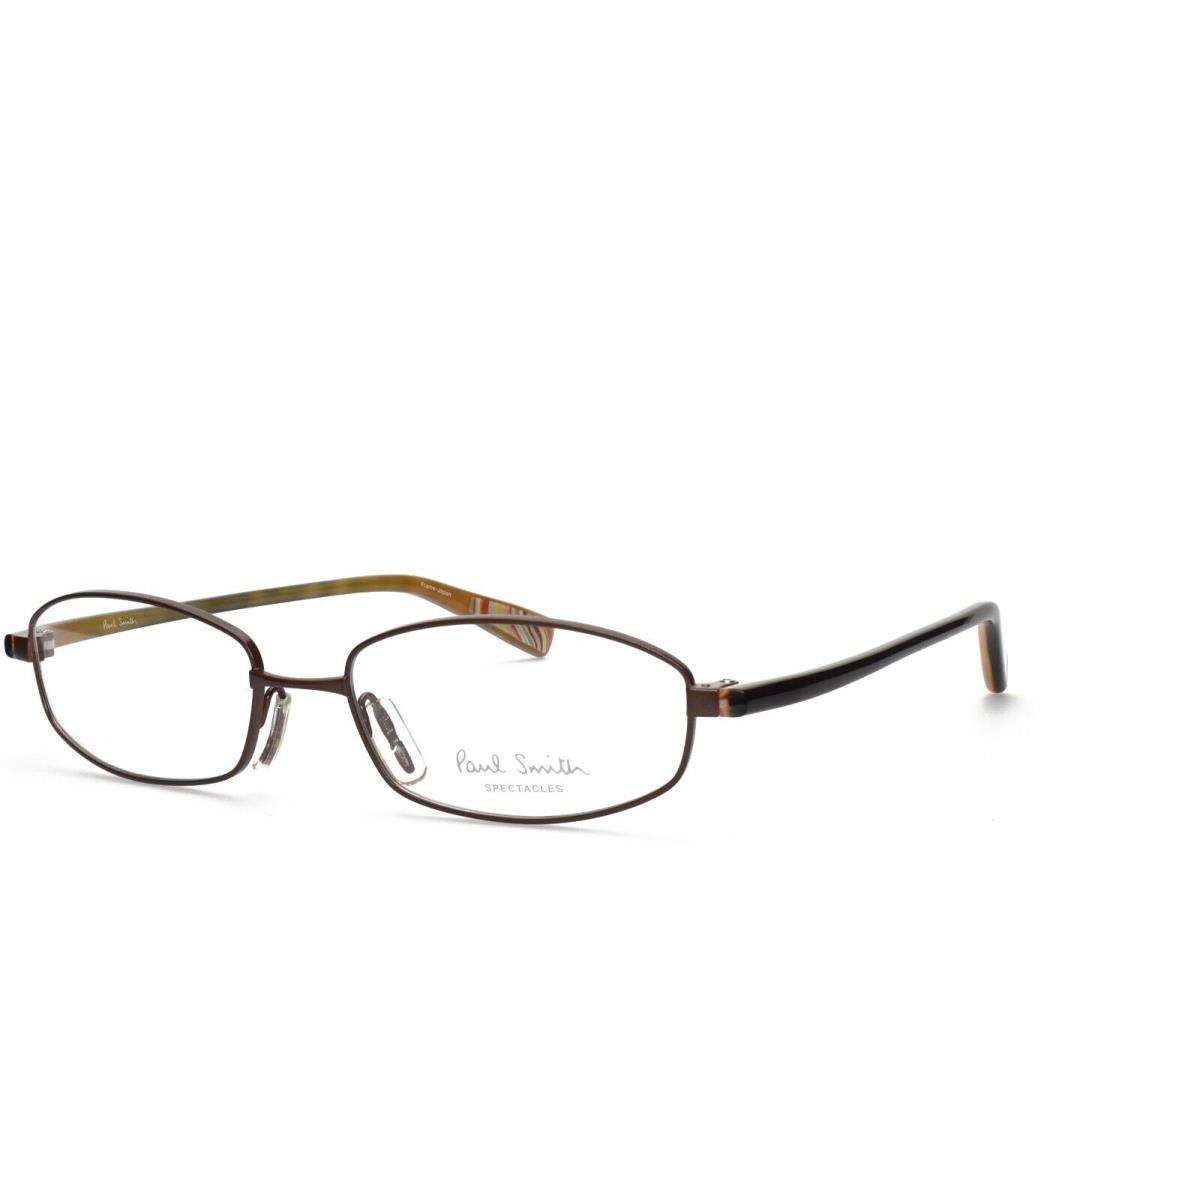 Paul Smith 194 Cho 51-16-140 Brown Vtg Vintage Eyeglasses Frames